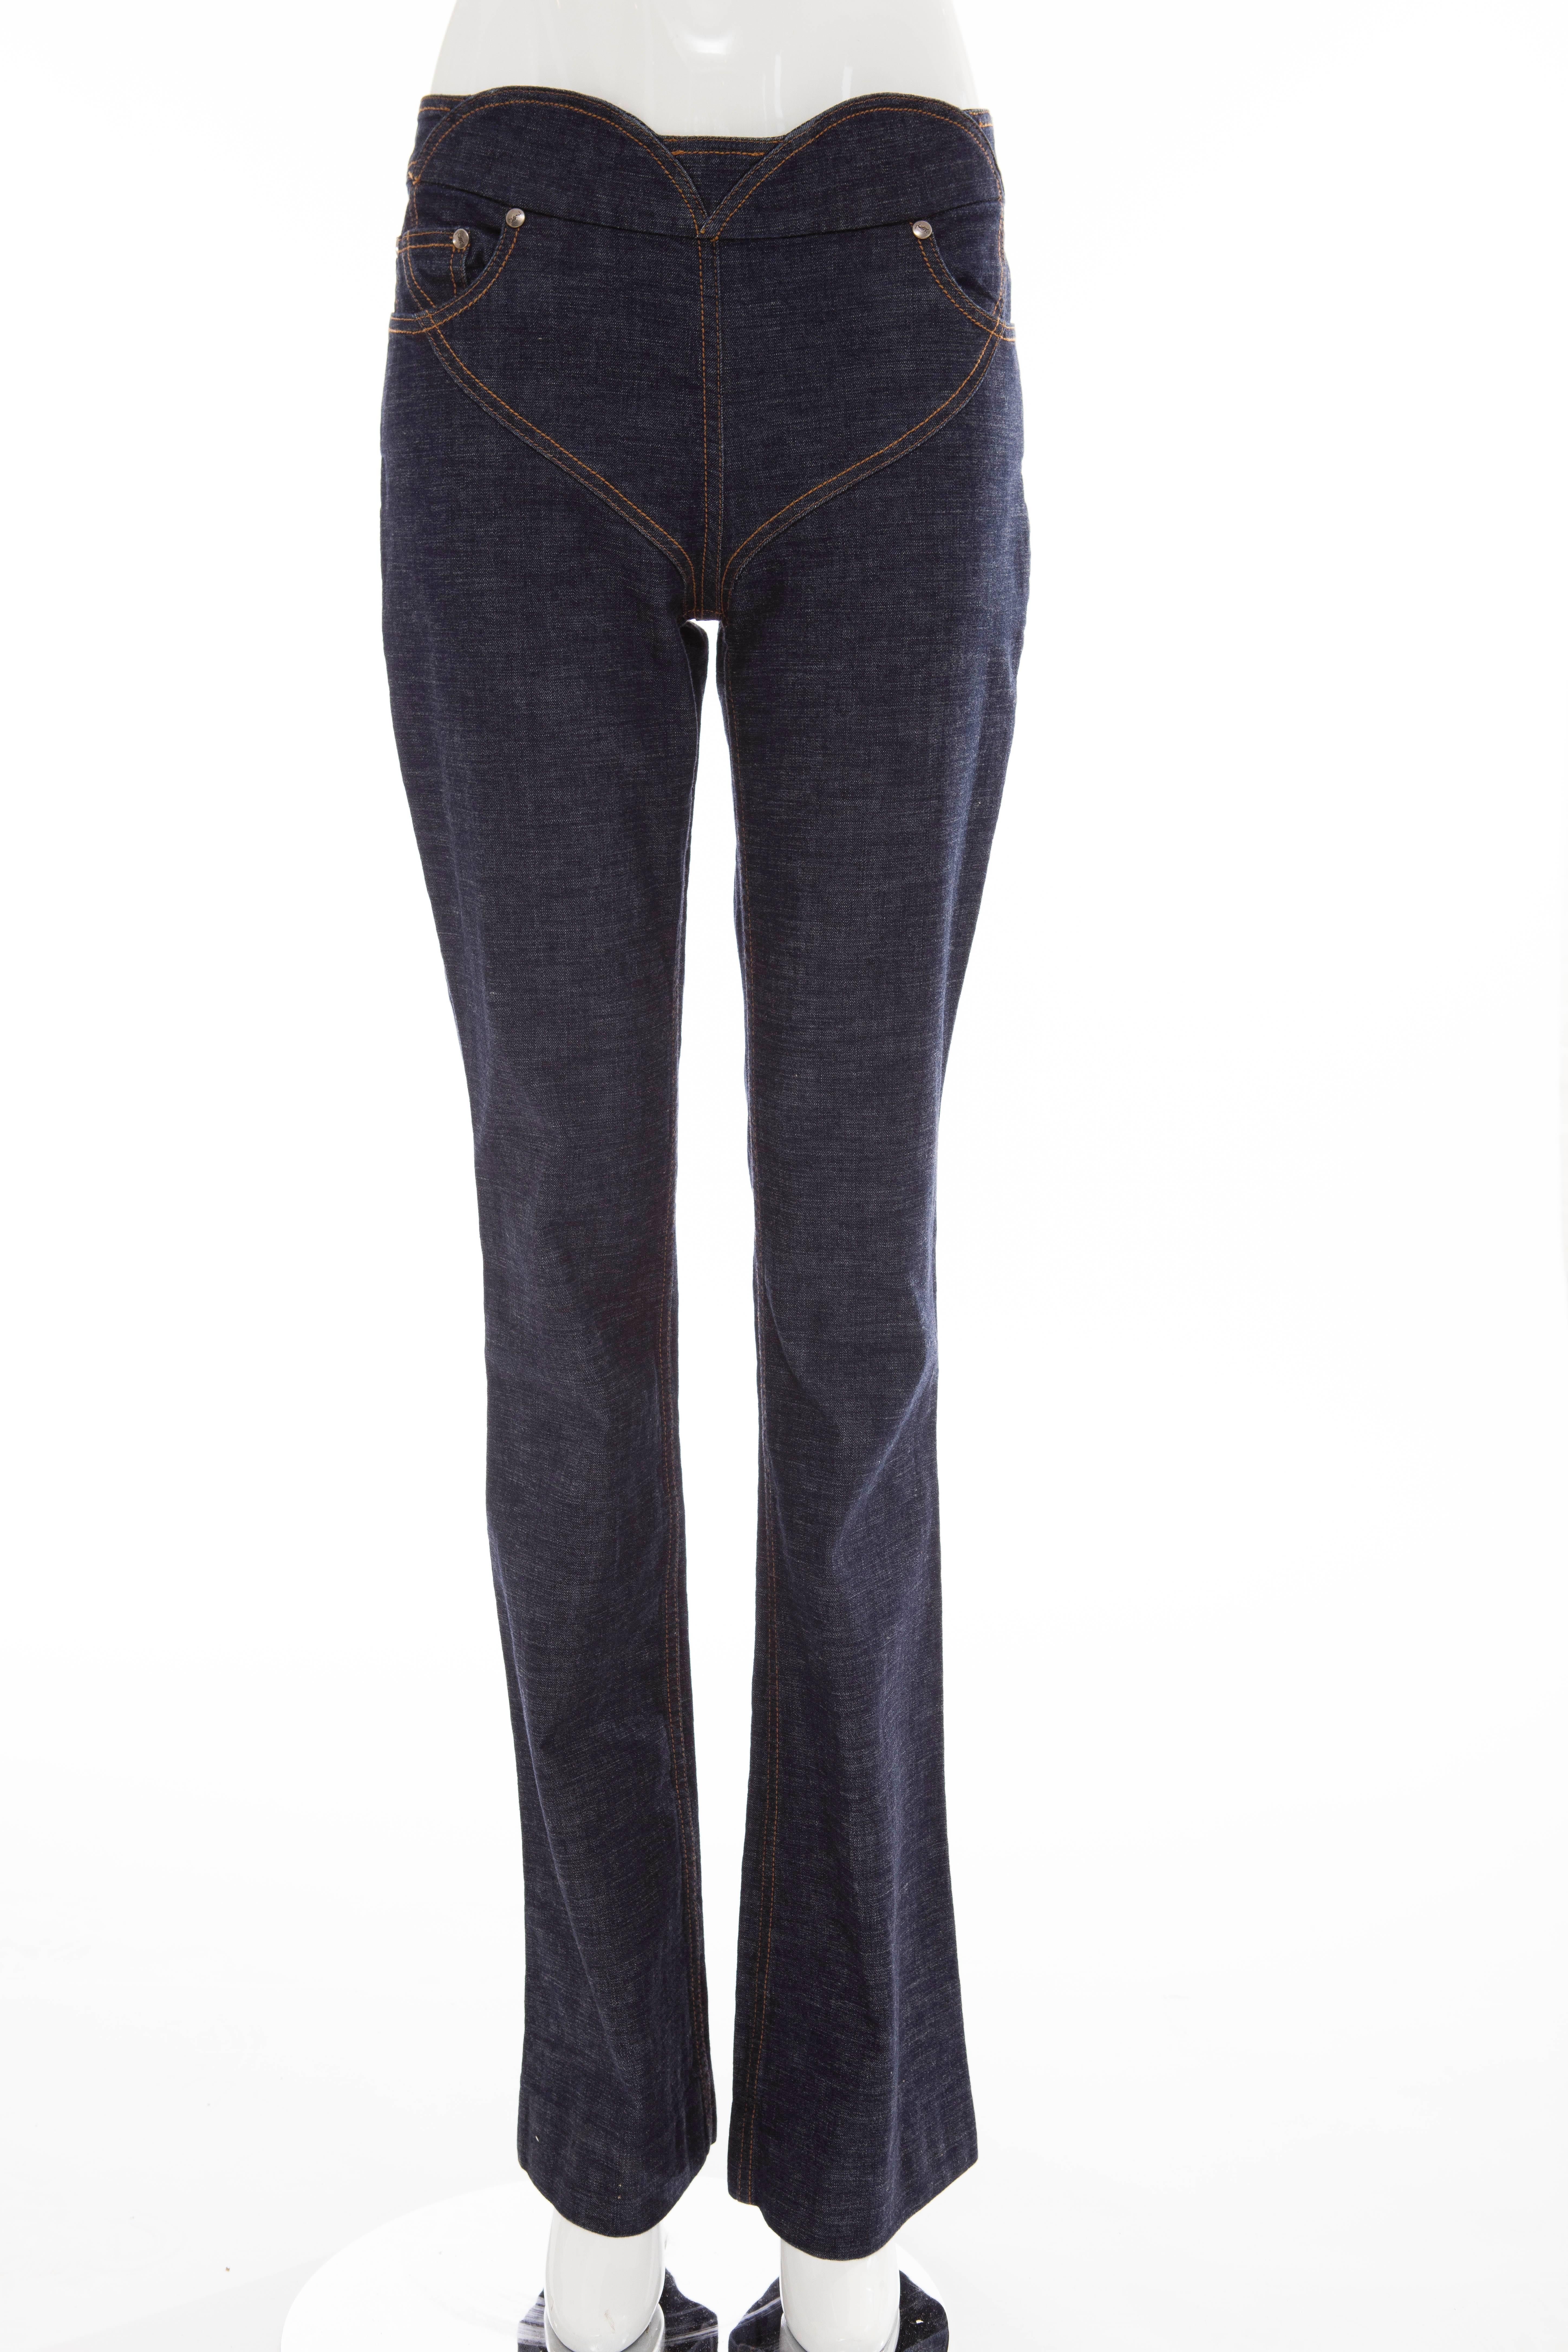 Black Tom Ford For Yves Saint Laurent Denim Pant Suit, Circa 2003  For Sale